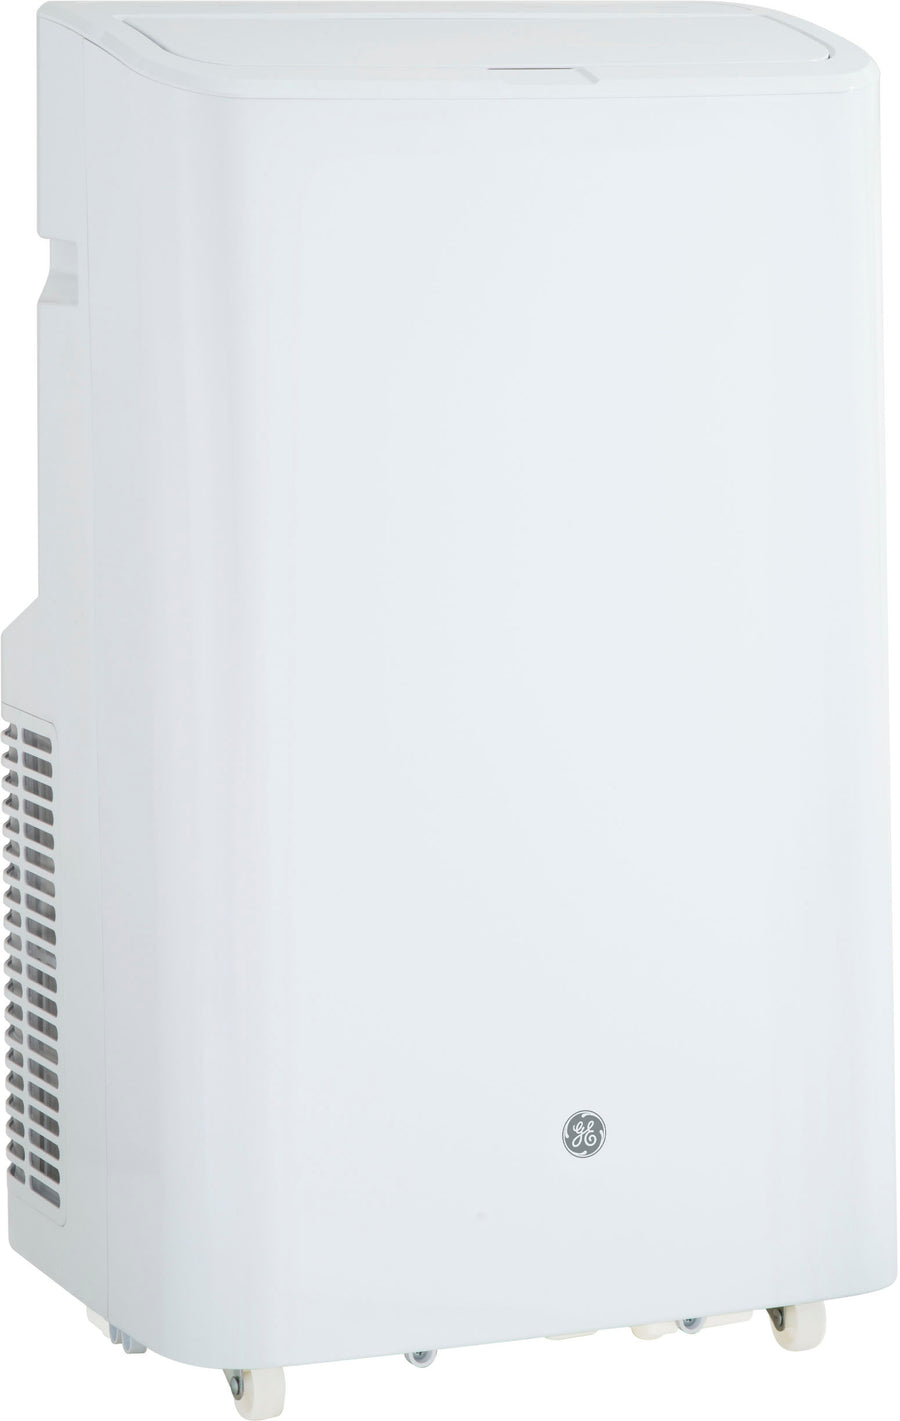 GE - 300 Sq. Ft. 7550 BTU Smart Portable Air Conditioner 10 - White_0